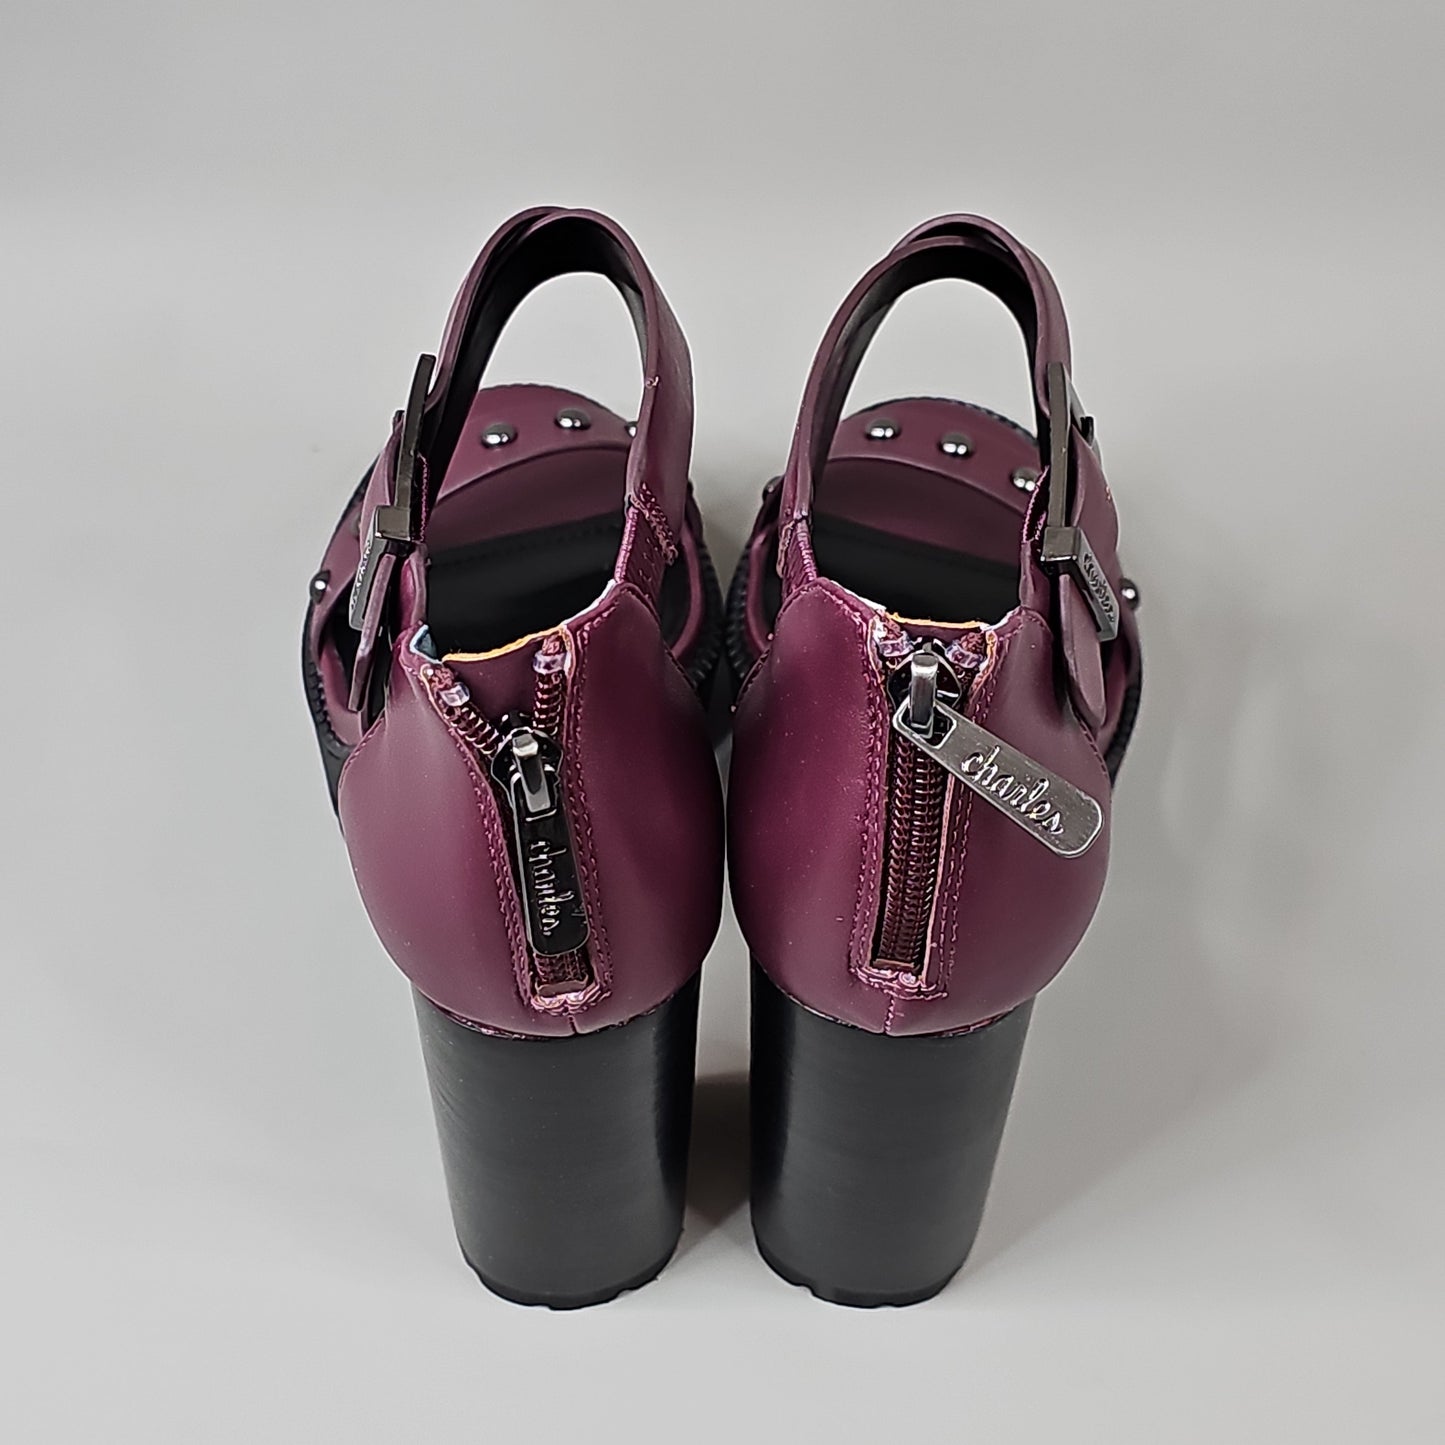 CHARLES BY CHARLES DAVID Women's Vanden Studded Sandal Shoe Sz 8.5M Burgundy (New)